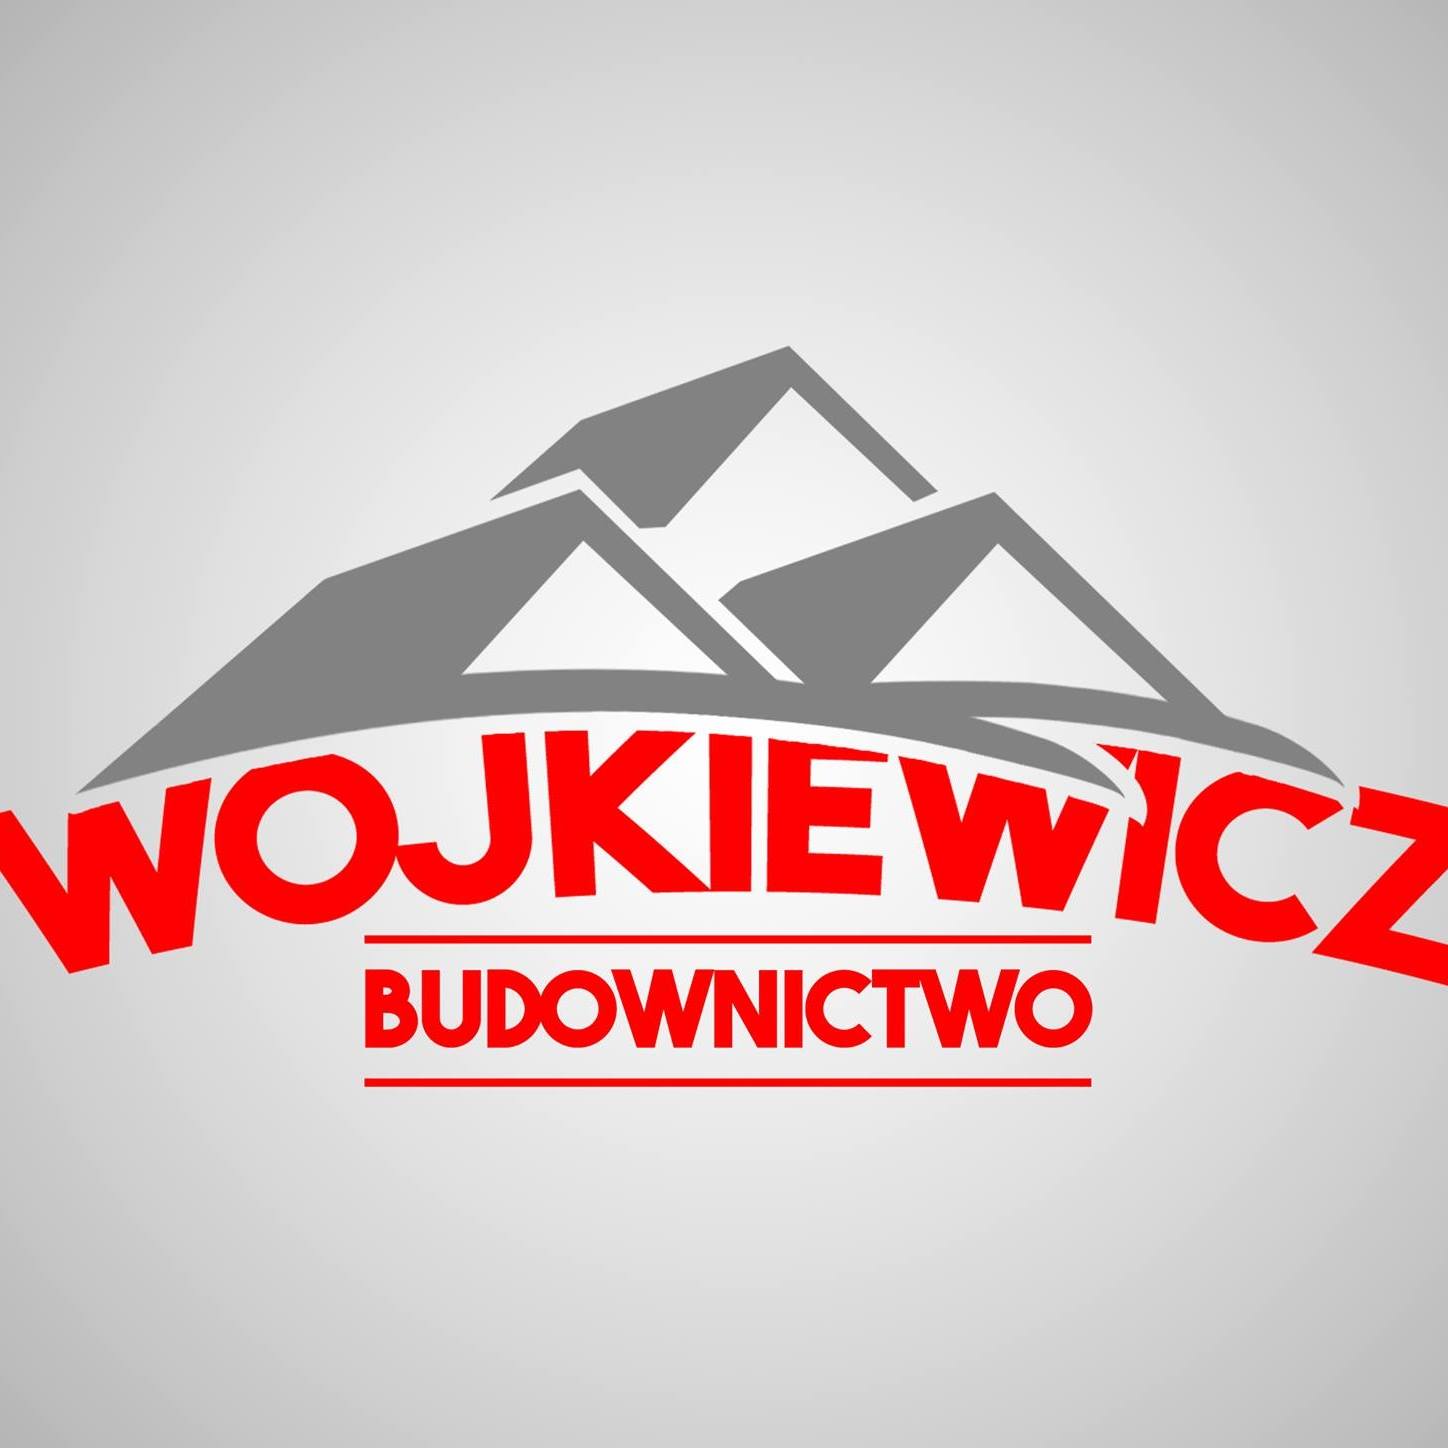 wojekiwicz budownictwo logo retro